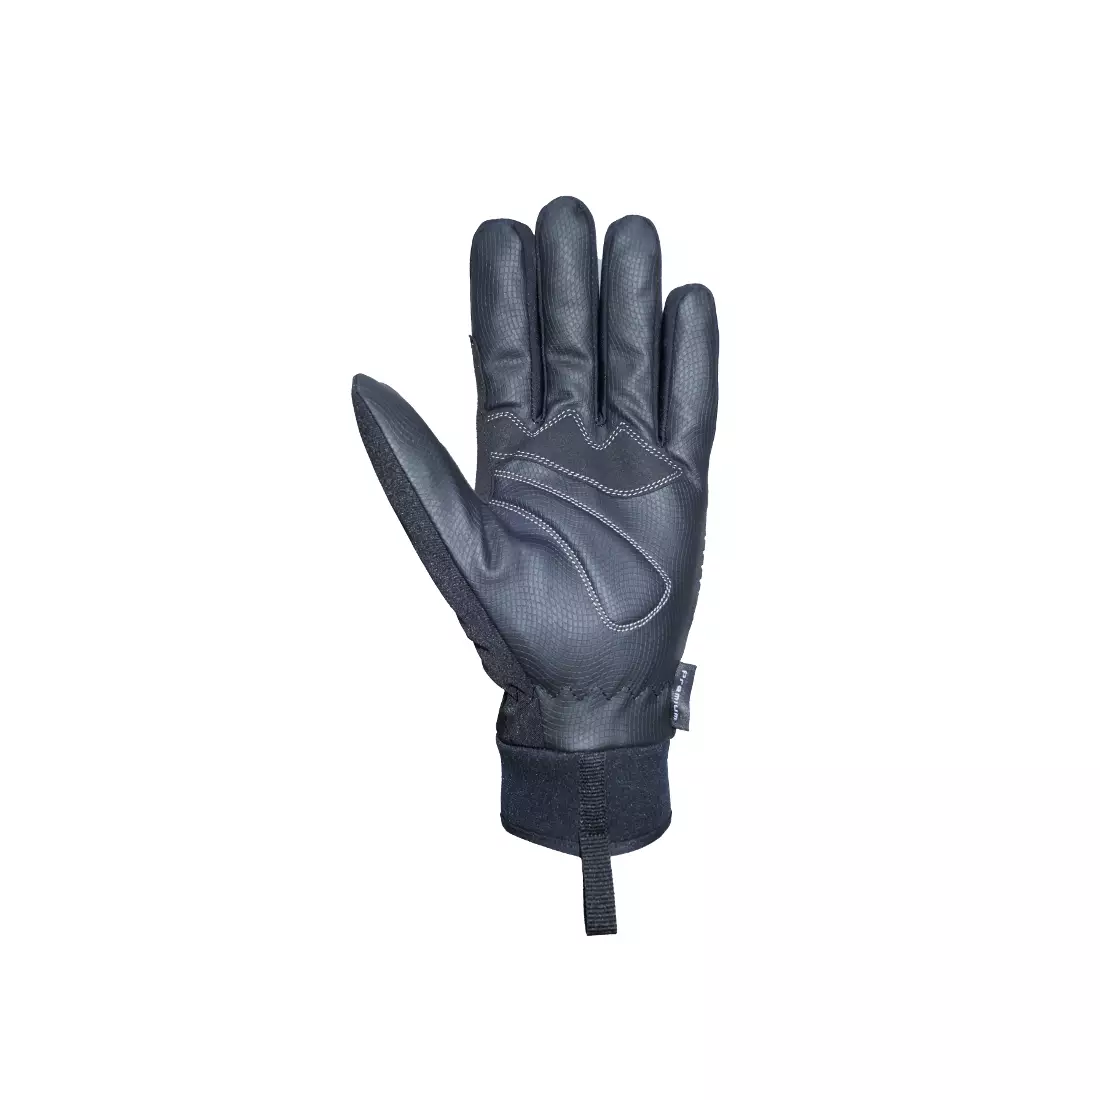 CHIBA RAIN TOUCH zimné cyklistické rukavice, čierne 3120018